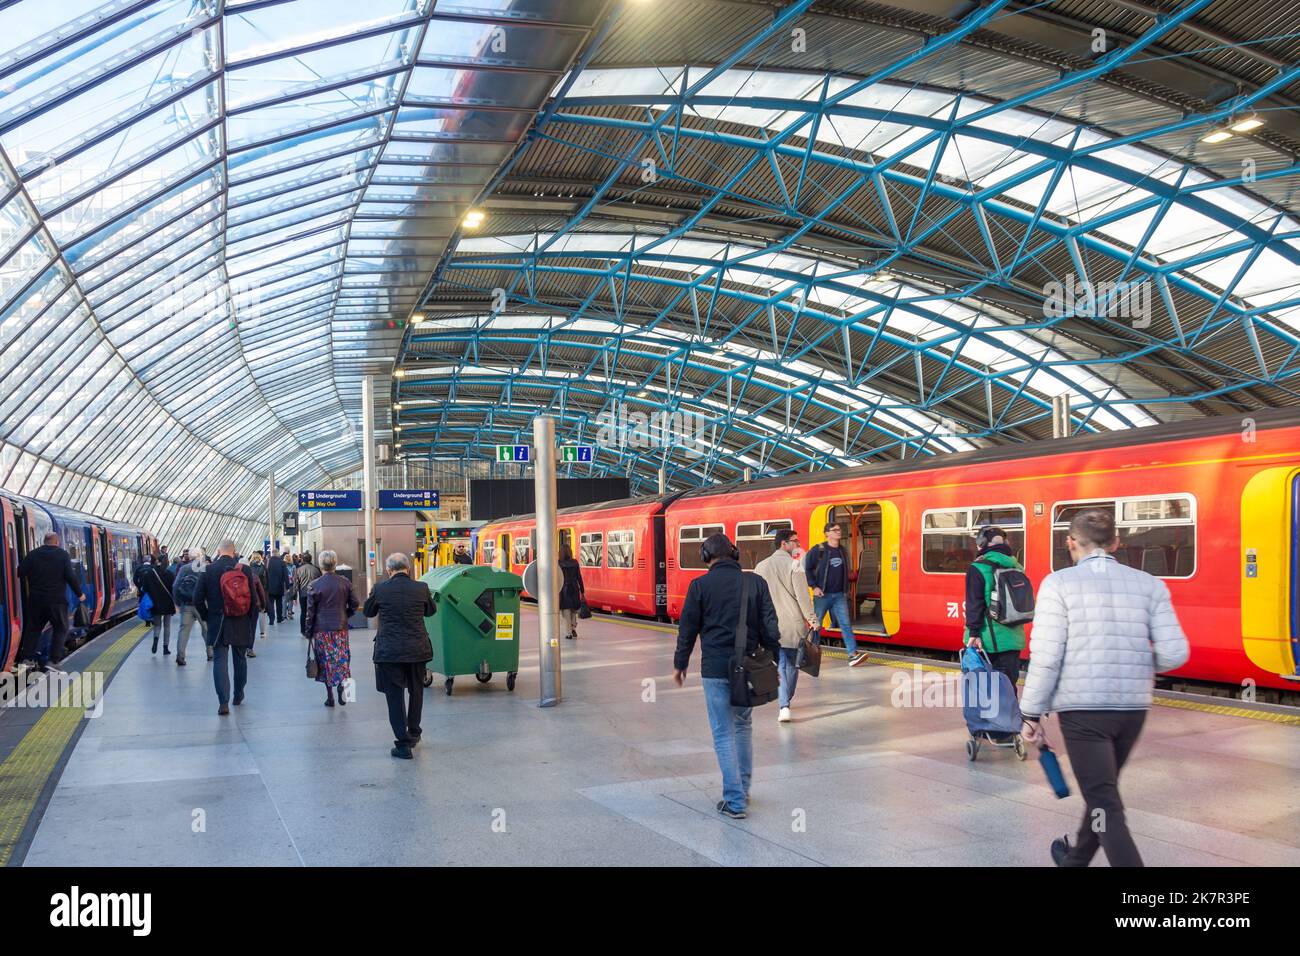 Passagers quittant le train à la gare de London Waterloo, Waterloo, London Borough of Lambeth, Greater London, Angleterre, Royaume-Uni Banque D'Images